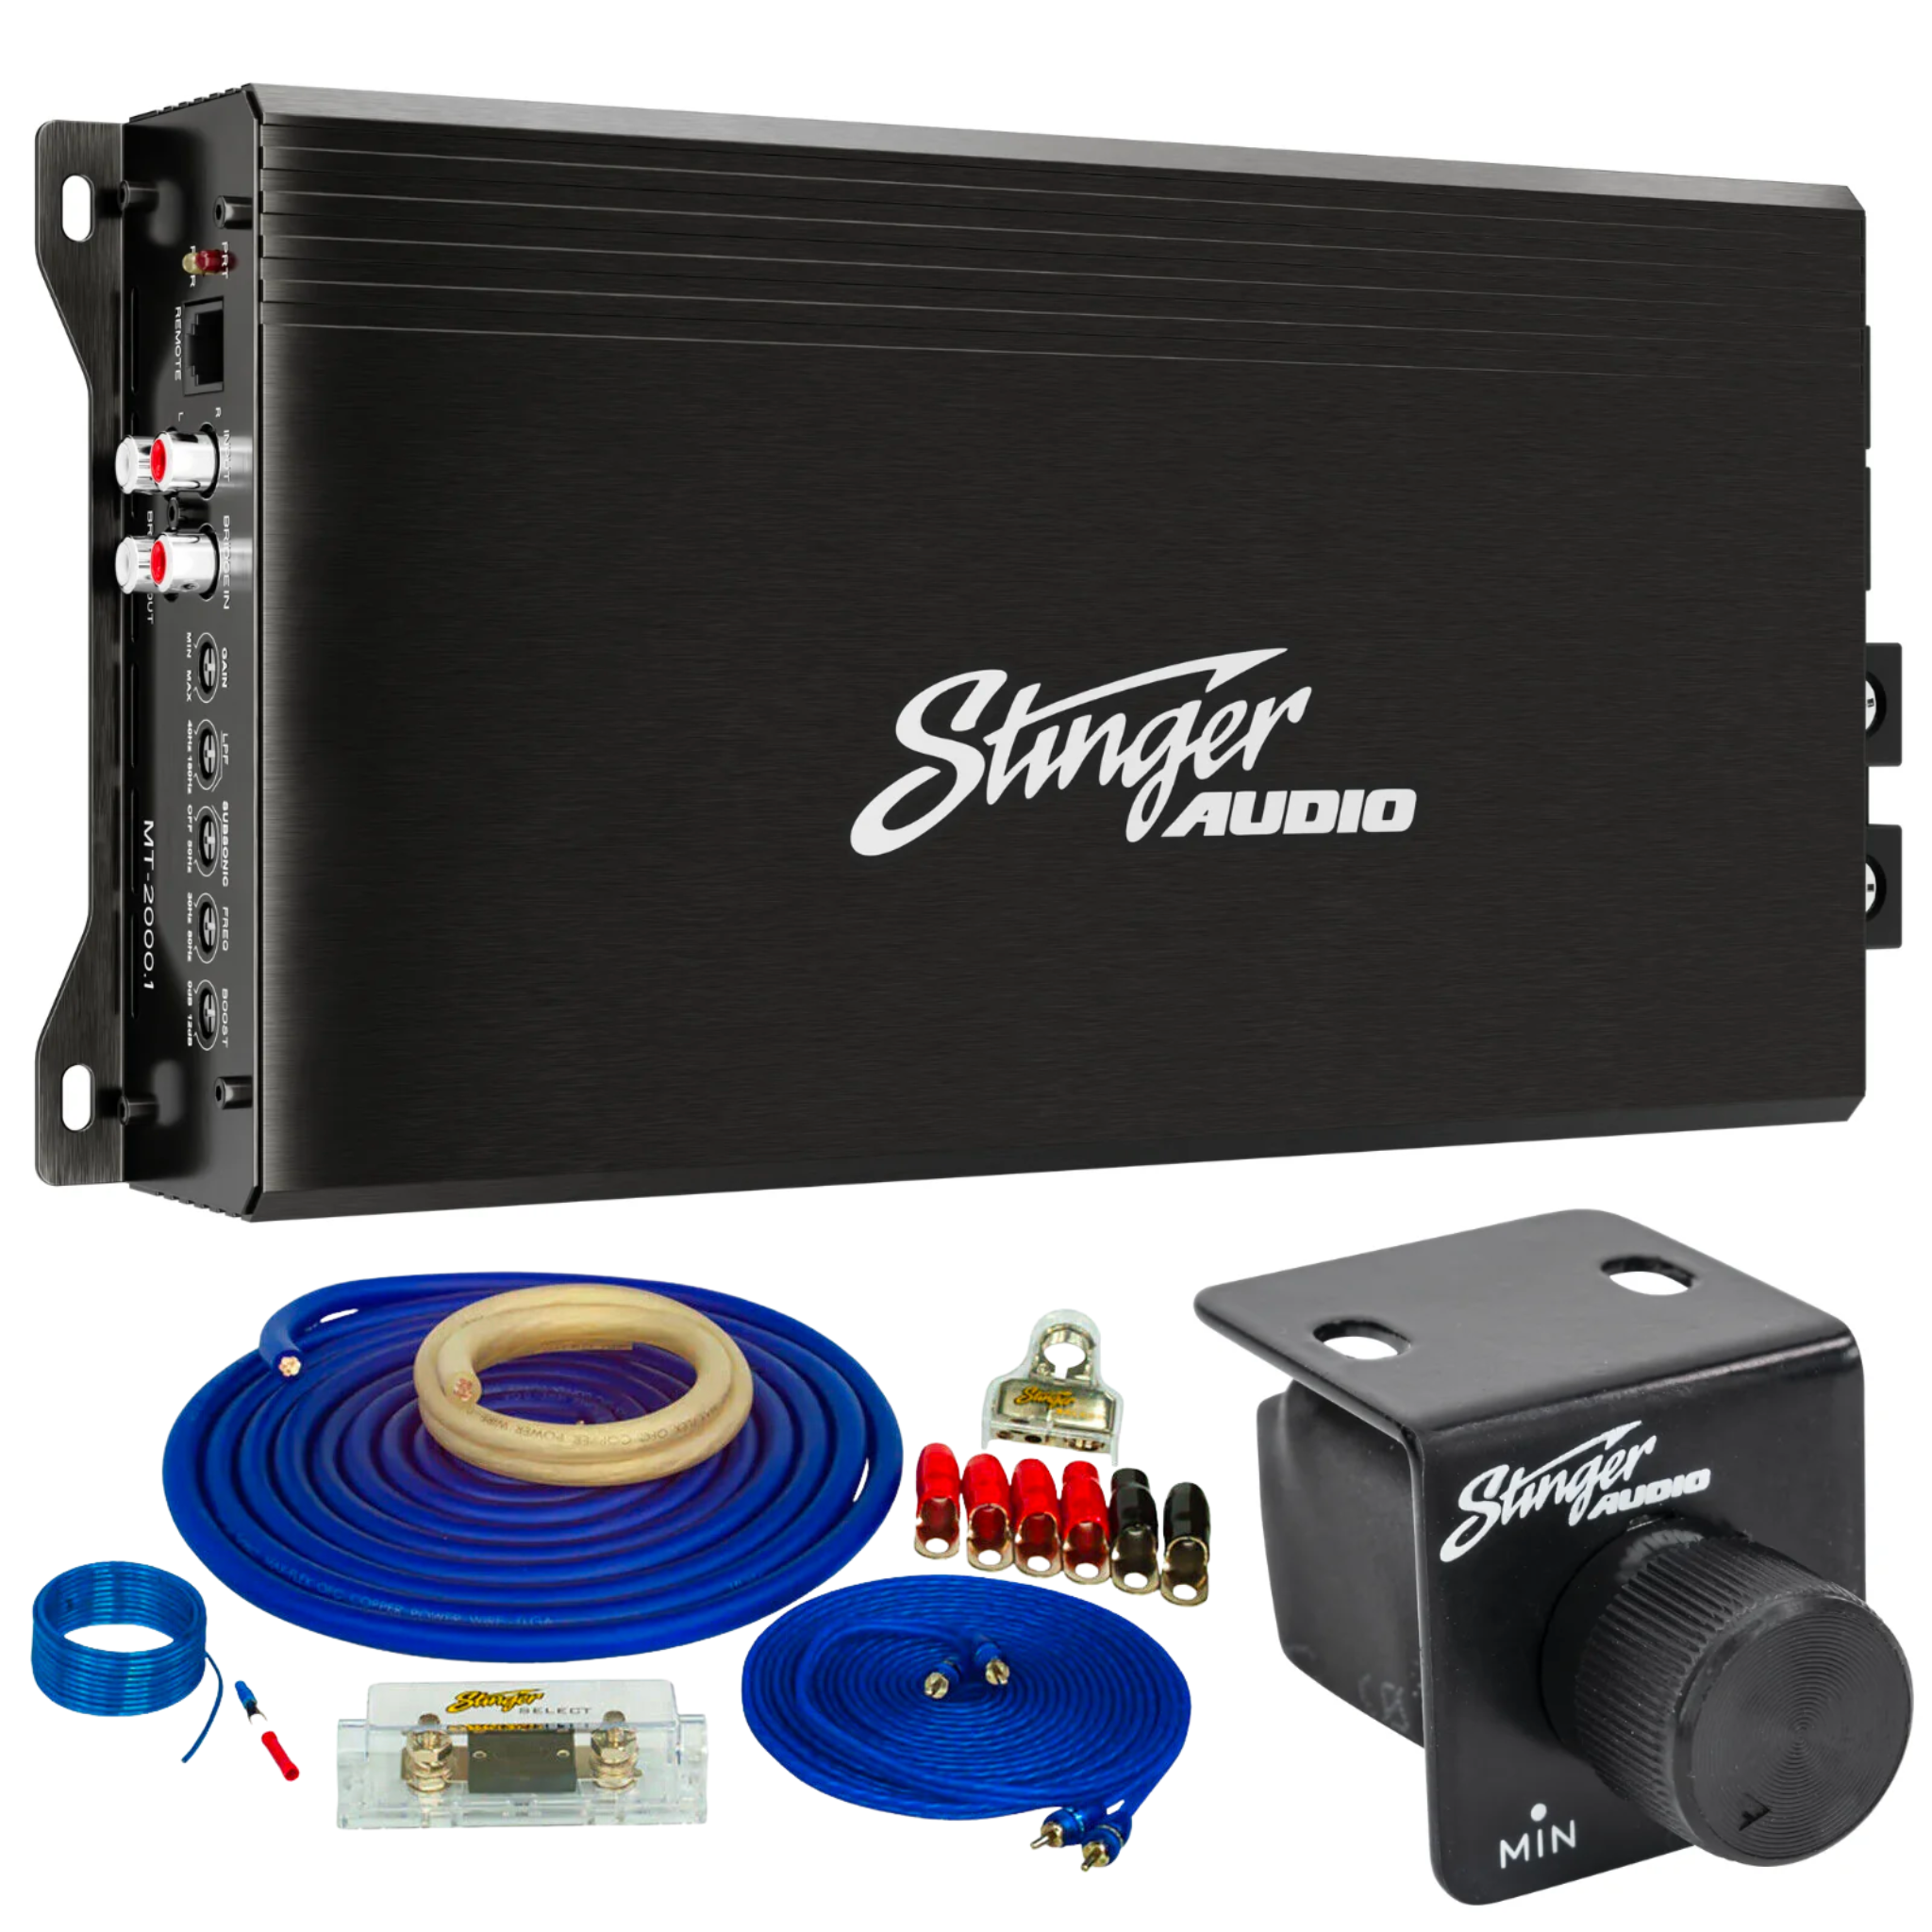 Stinger Audio MT-2000.1 2,000 Watt (RMS) Class D Monoblock Car Audio Amplifier with 1/0GA Wiring Kit